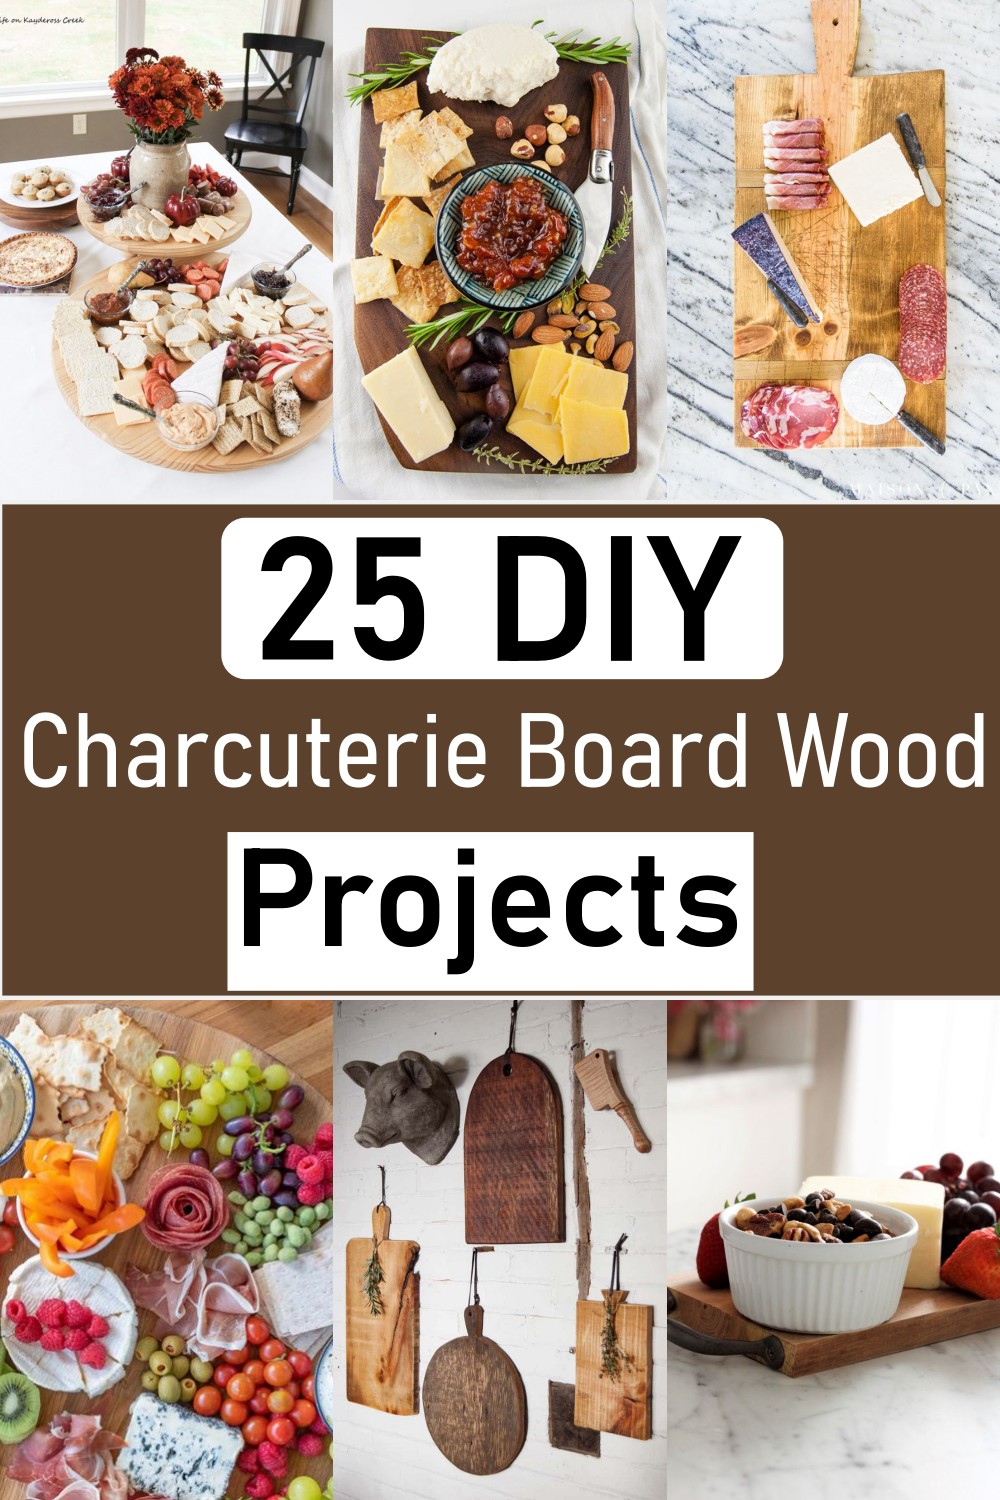  Charcuterie Board Wood